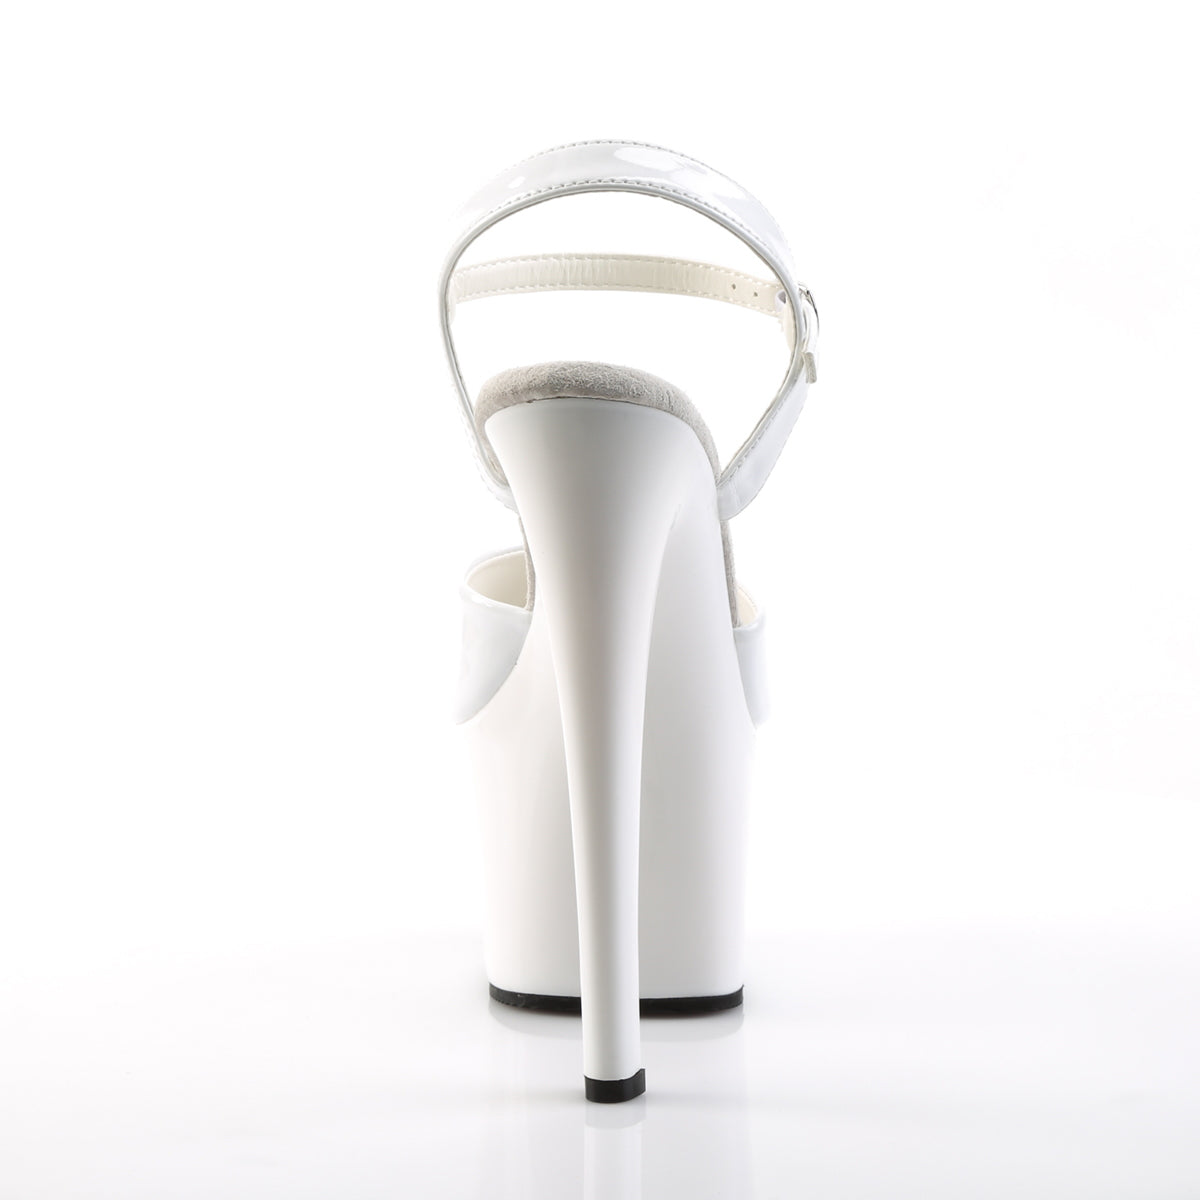 SKY-309 White Patent Platform Sandal Pleaser